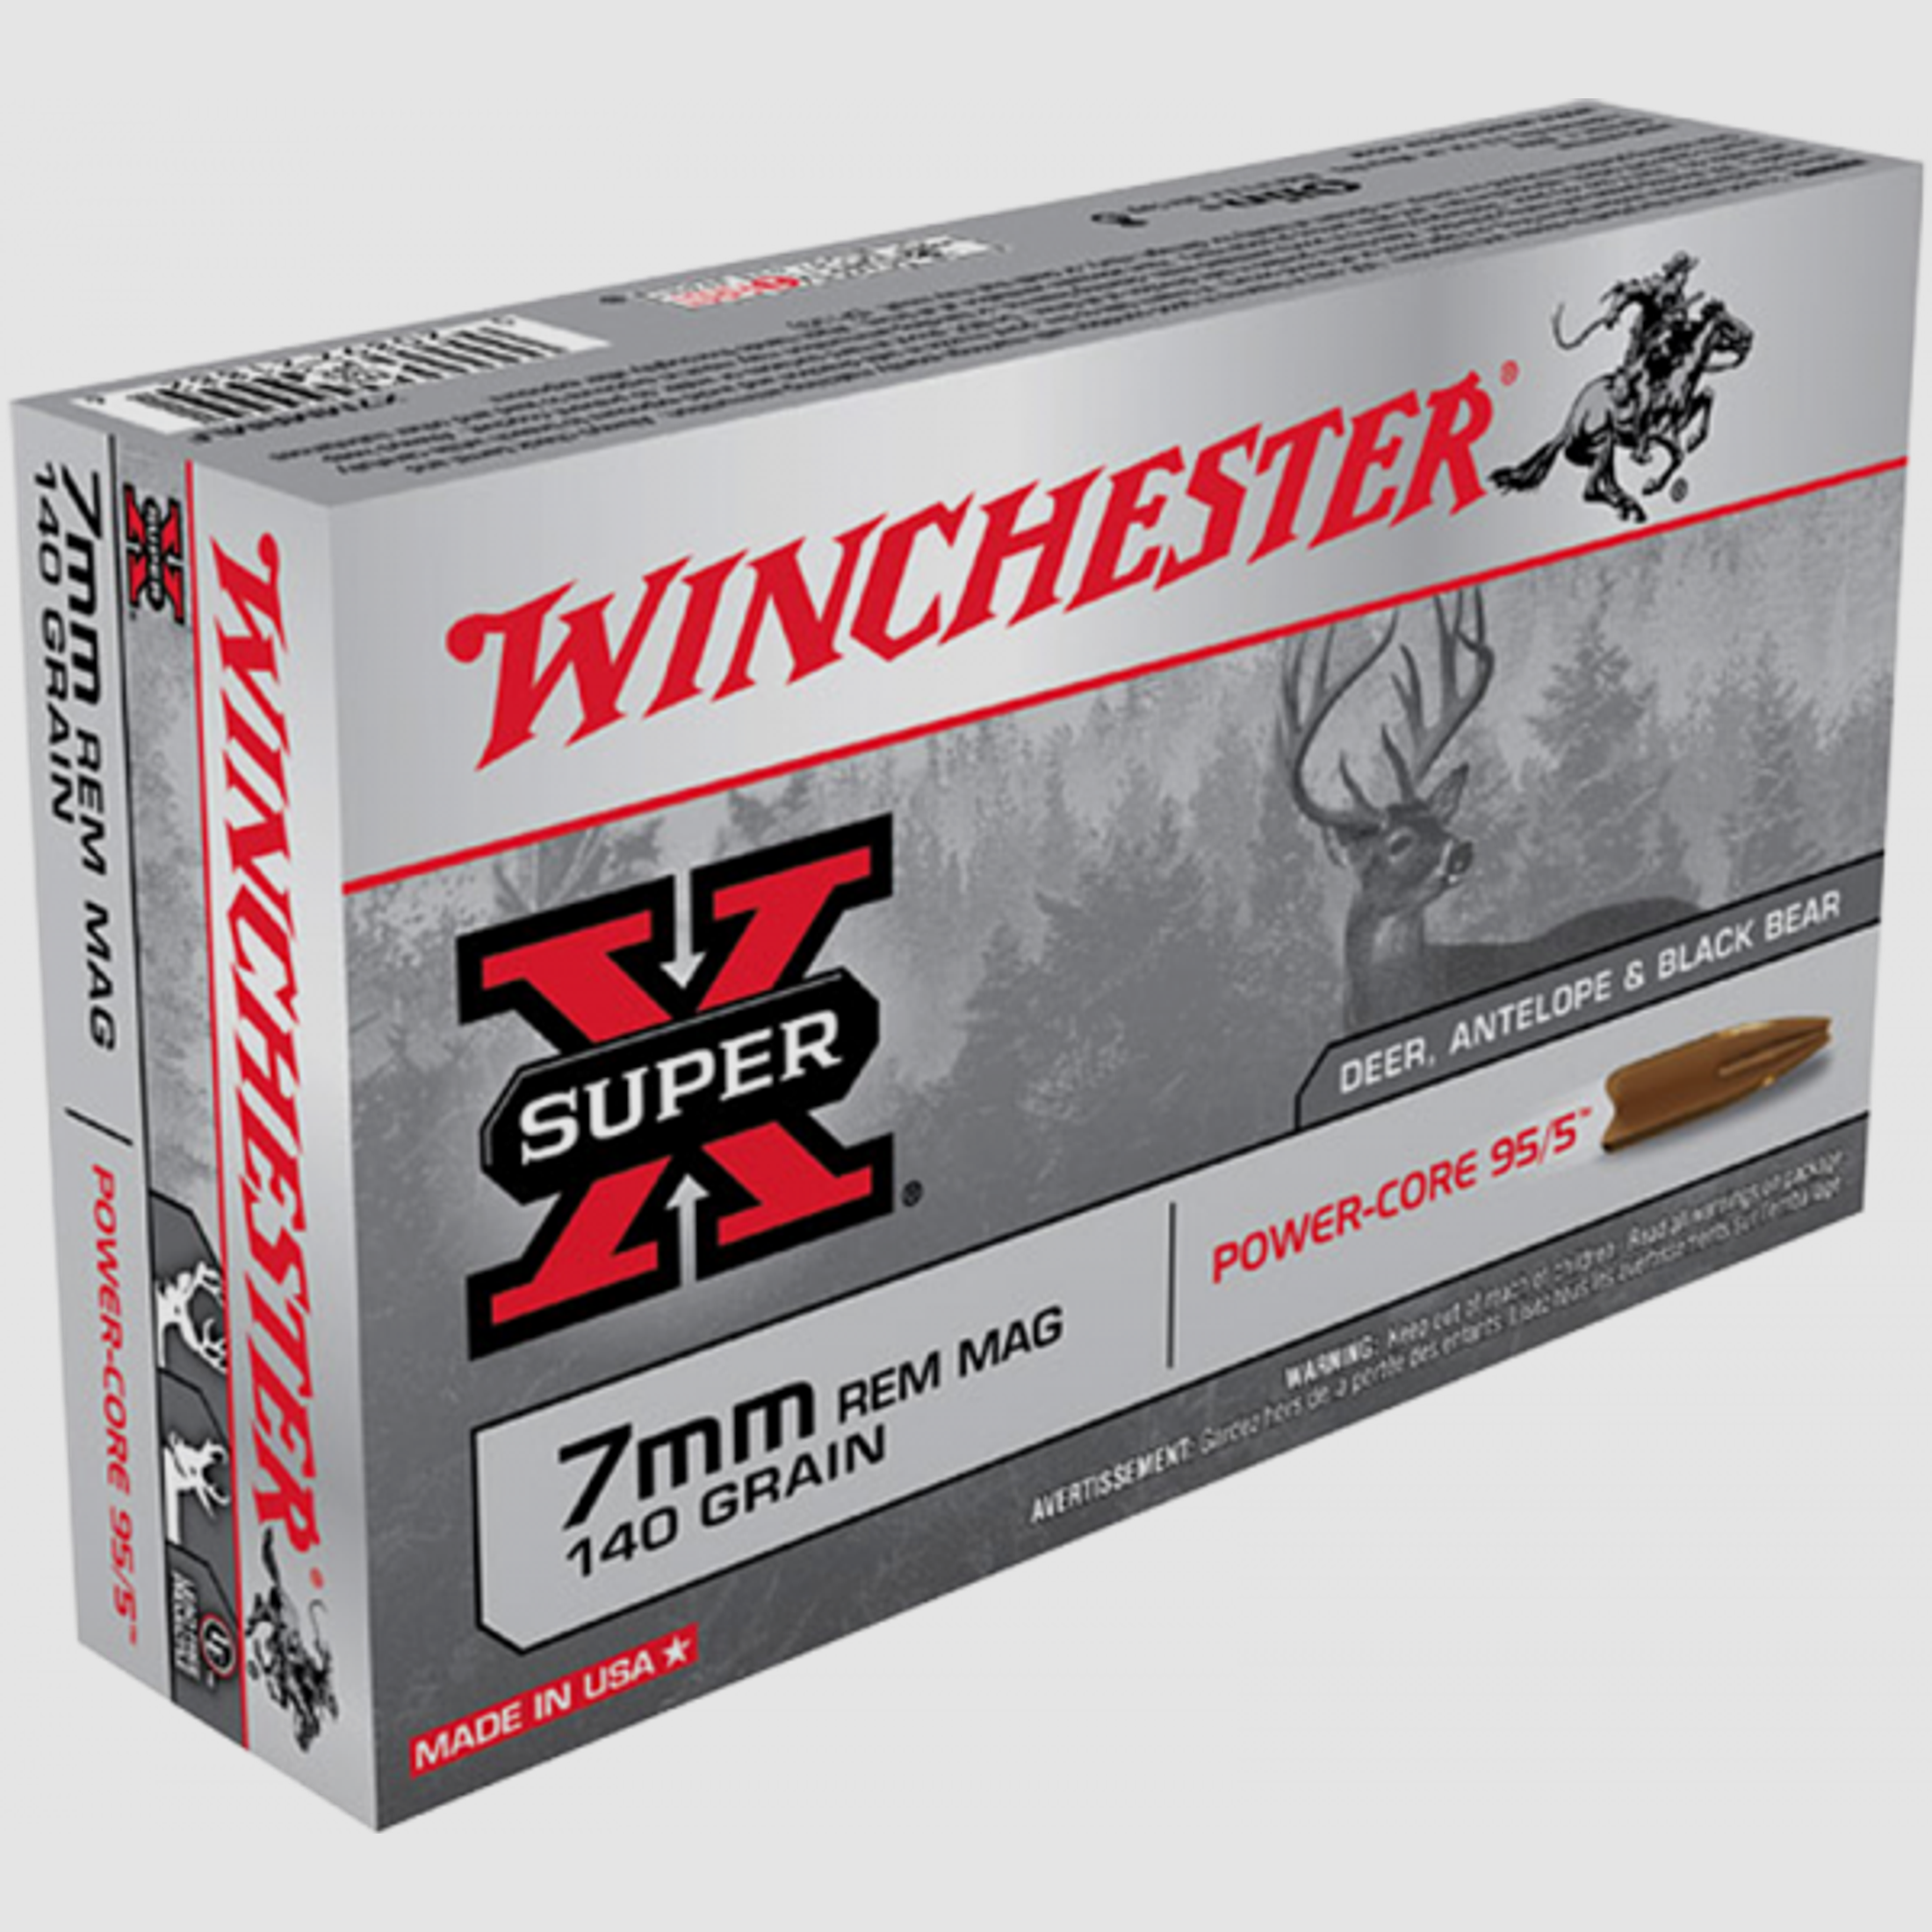 Winchester Super X 7mm Rem Mag Winchester Power Core 95/5 140 grs Büchsenpatronen